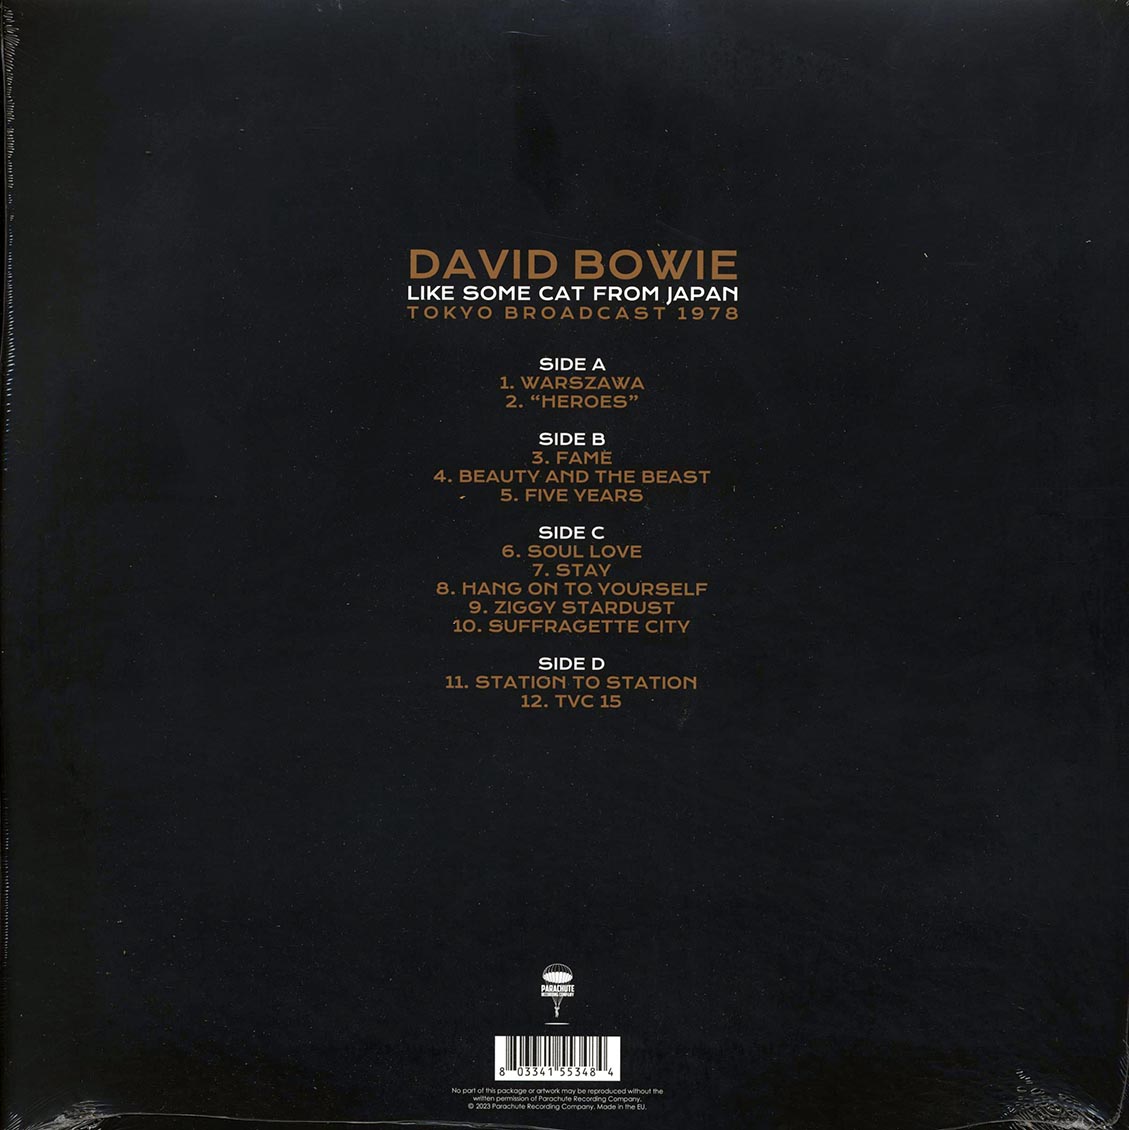 David Bowie - Like Some Cat From Japan: Tokyo Broadcast 1978 (ltd. ed.) (2xLP) (clear vinyl) - Vinyl LP, LP